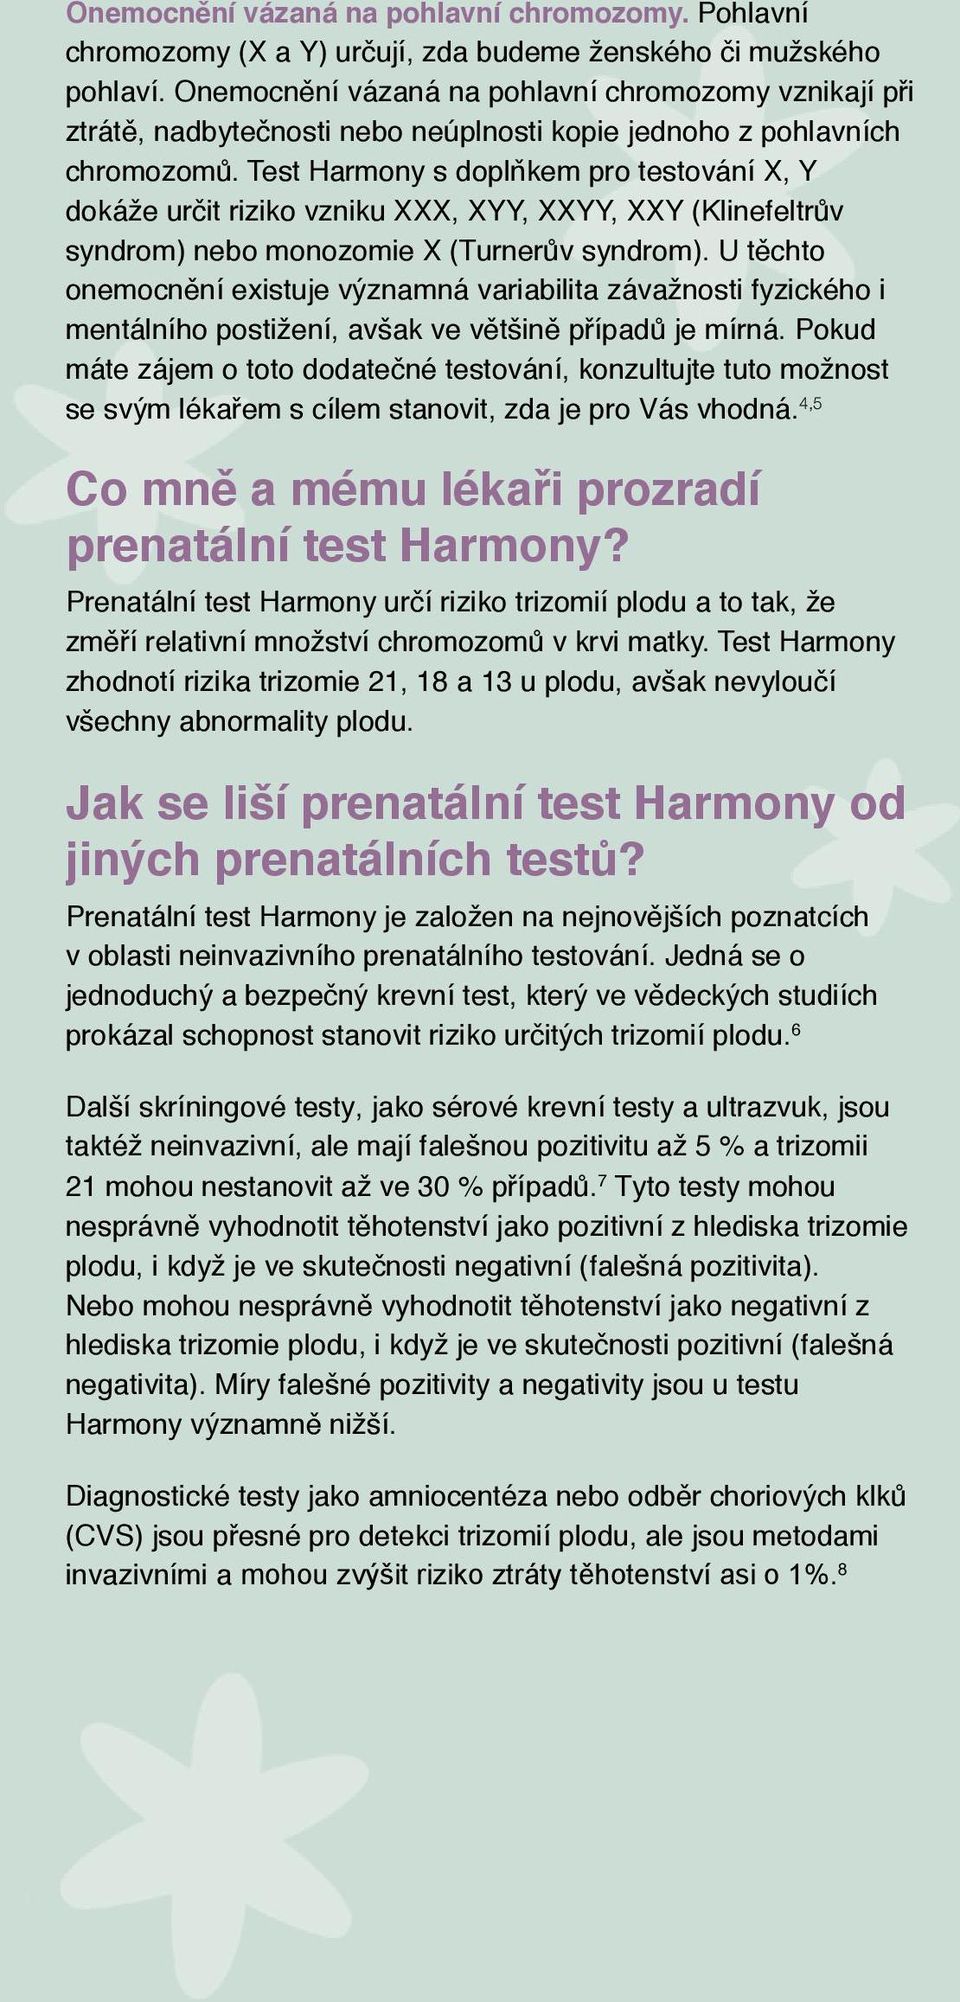 Test Harmony s doplňkem pro testování X, Y dokáže určit riziko vzniku XXX, XYY, XXYY, XXY (Klinefeltrův syndrom) nebo monozomie X (Turnerův syndrom).